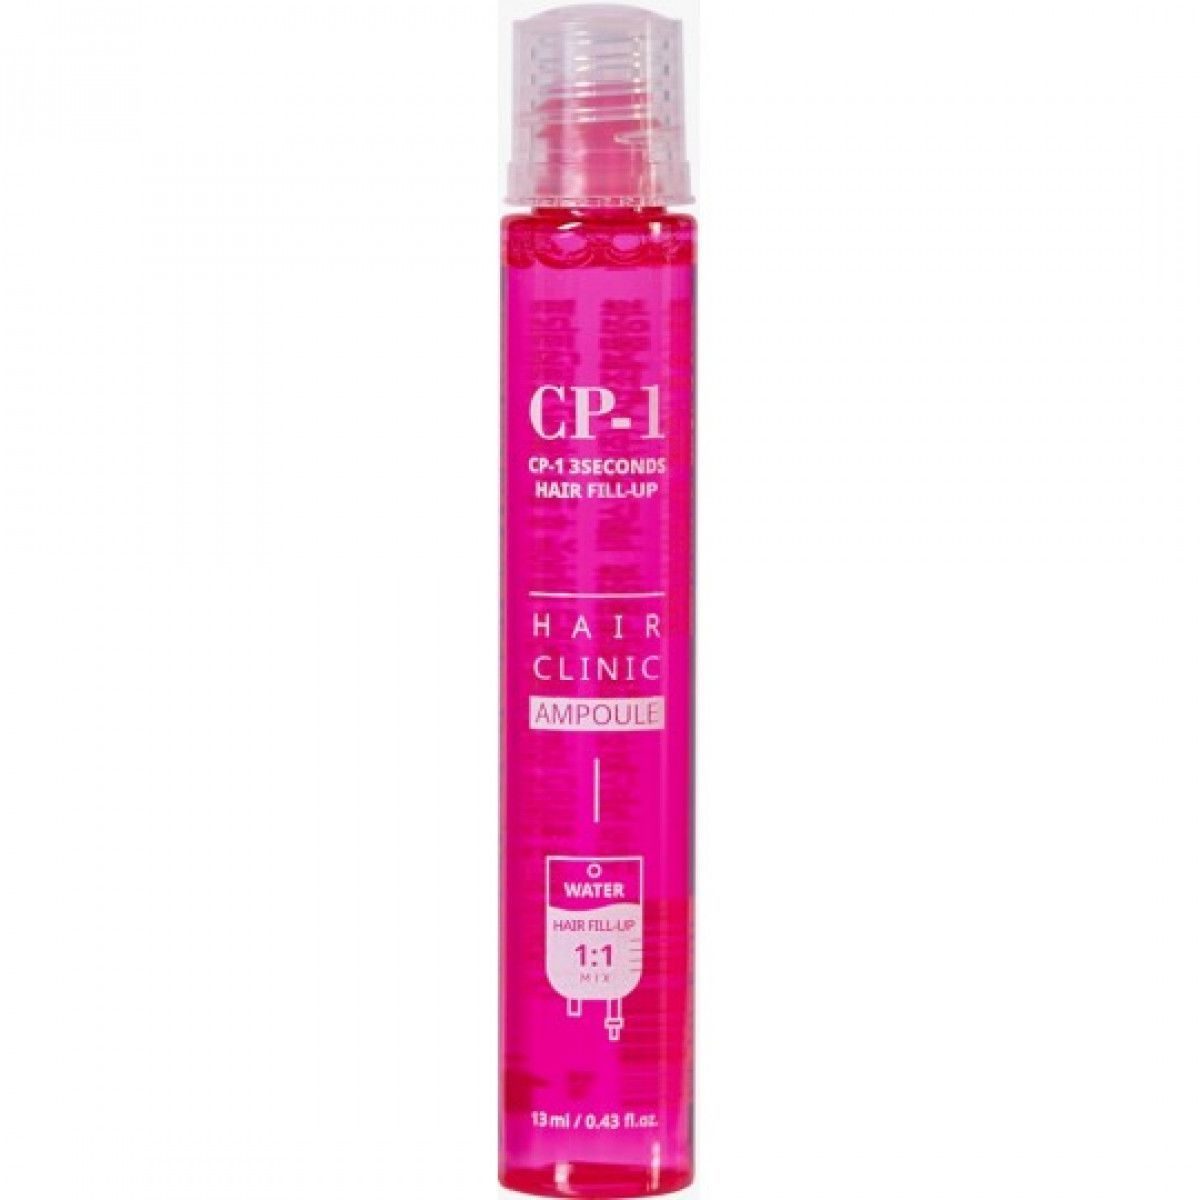 Esthetic House CP-1, Филлер для волос 3 seconds hair fill-up clinic ampoule, розовый (13 мл)